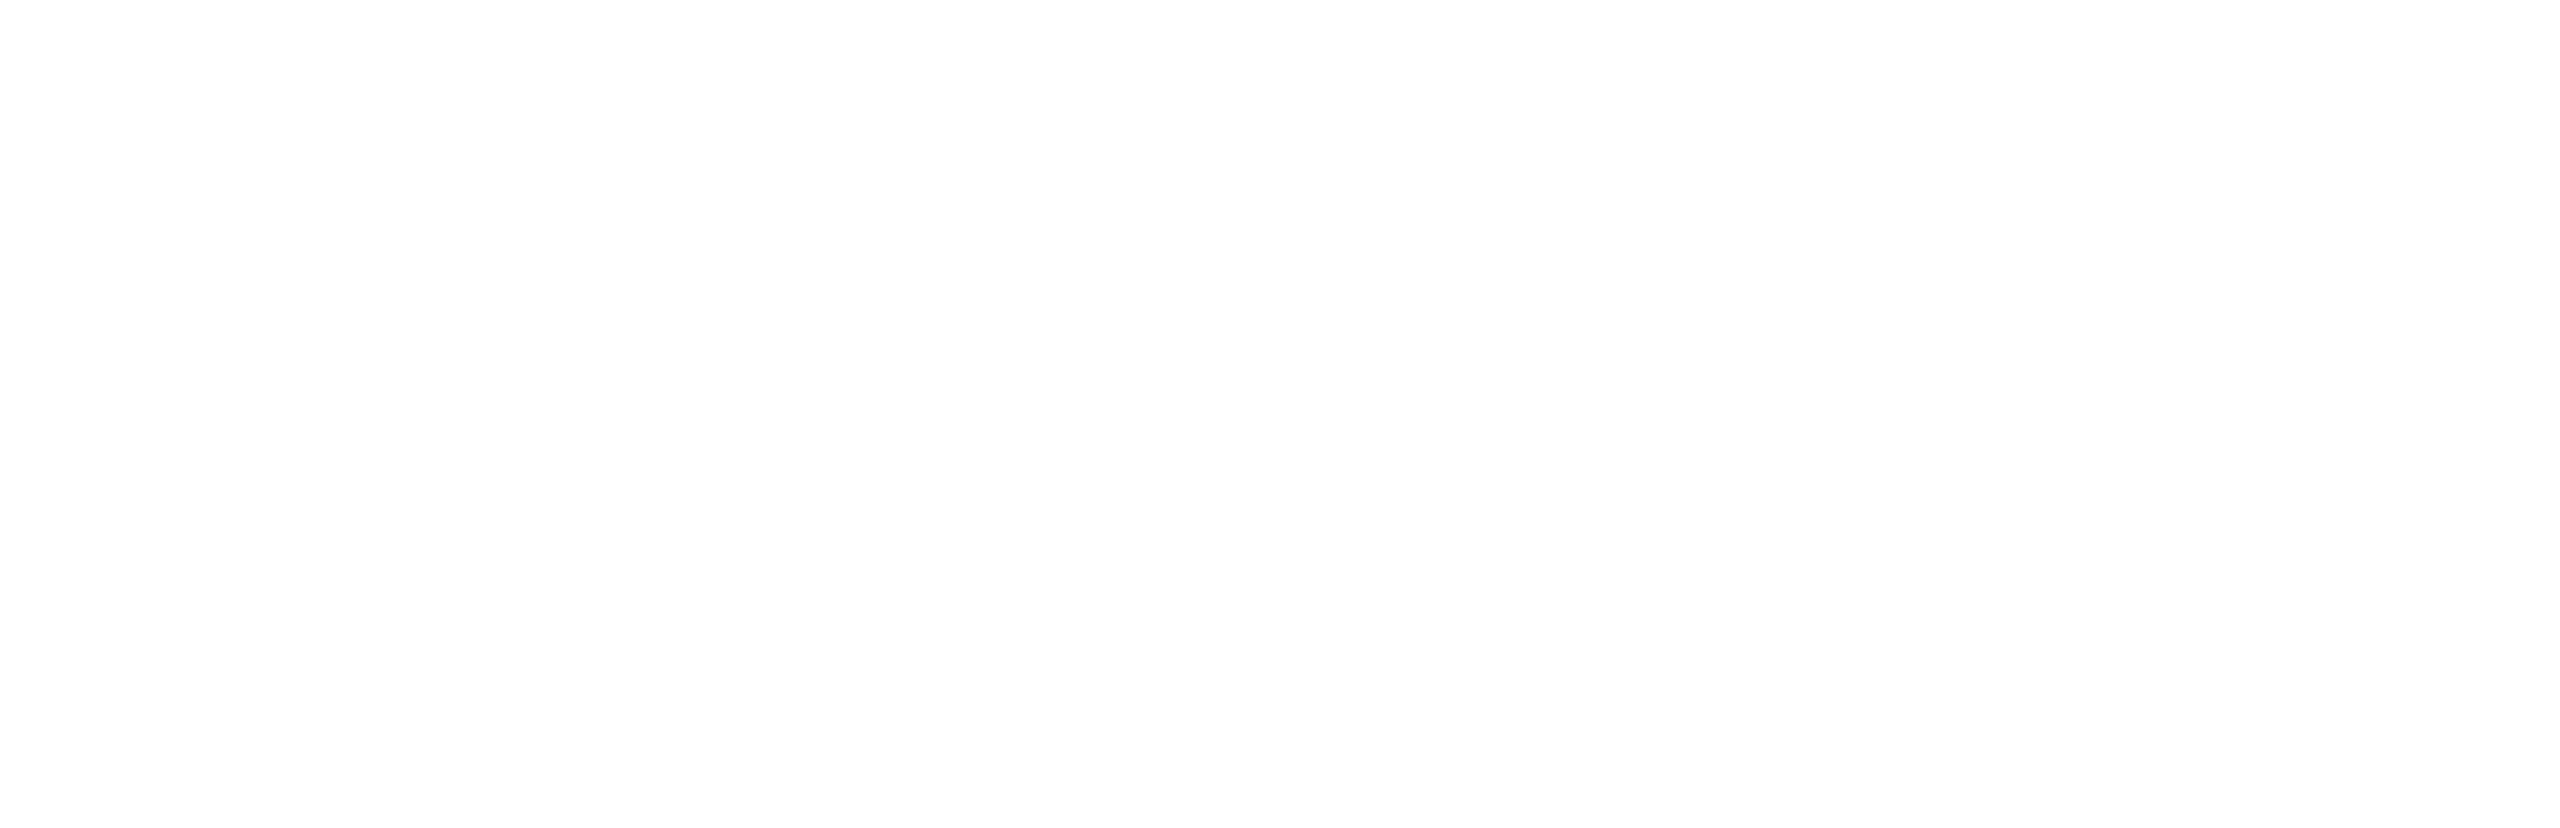 Orion Retreat Koh Samui Thailand